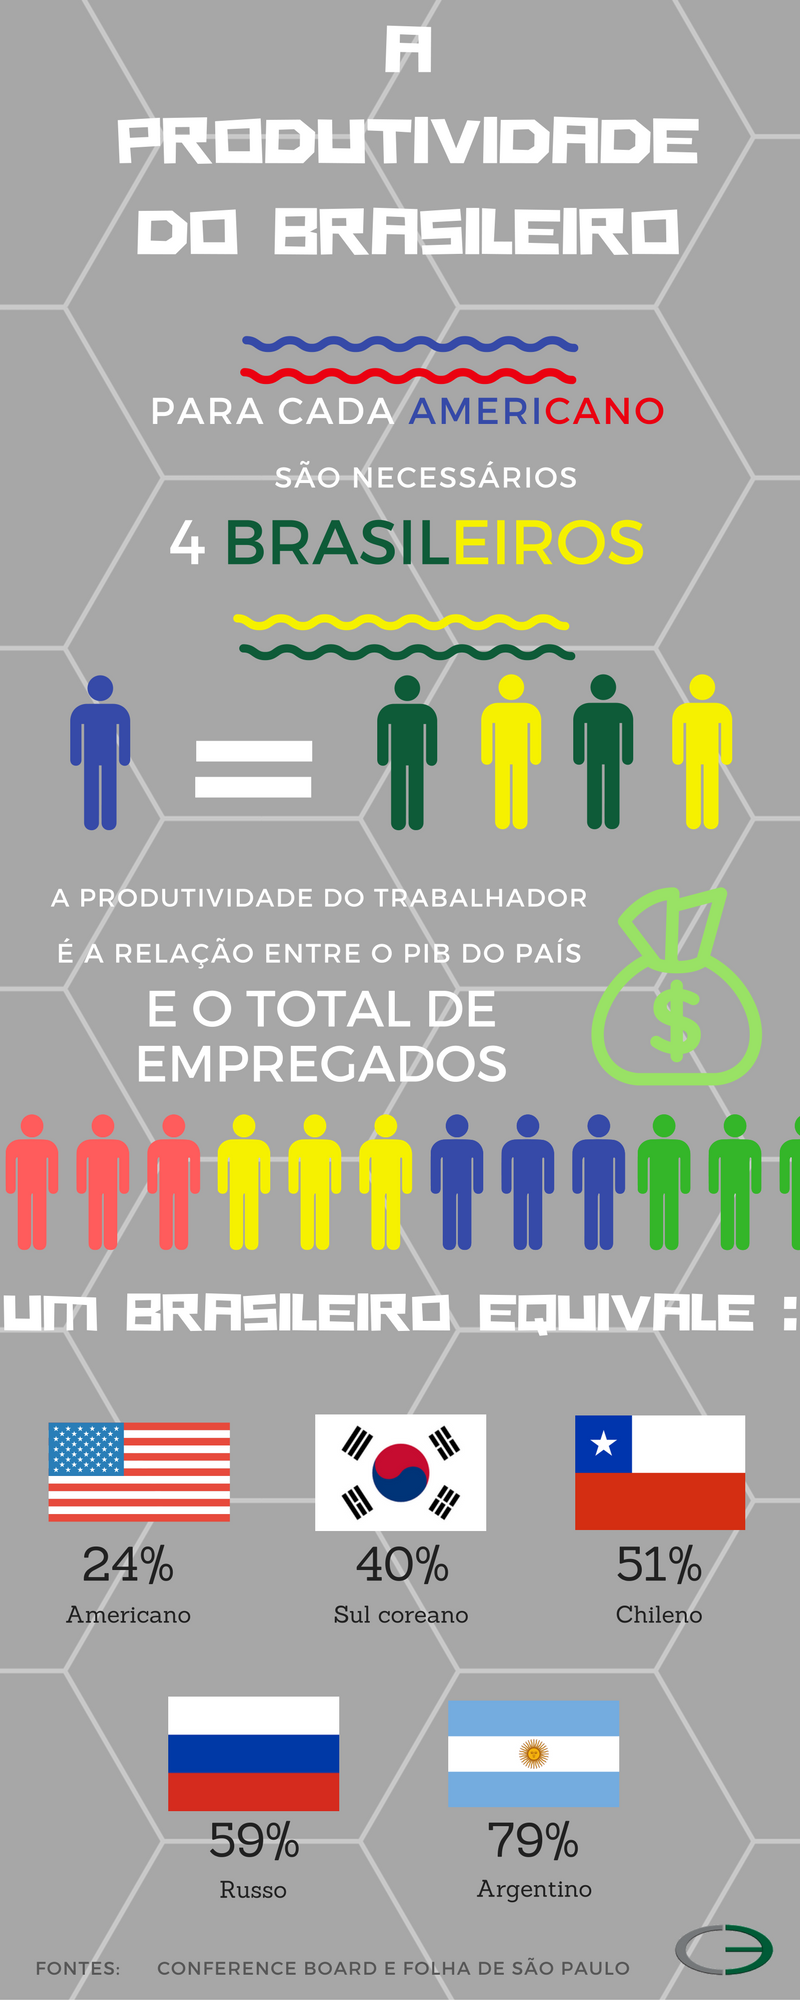 Elo Group A Baixa Produtividade Trabalhador Brasileiro Infográfico